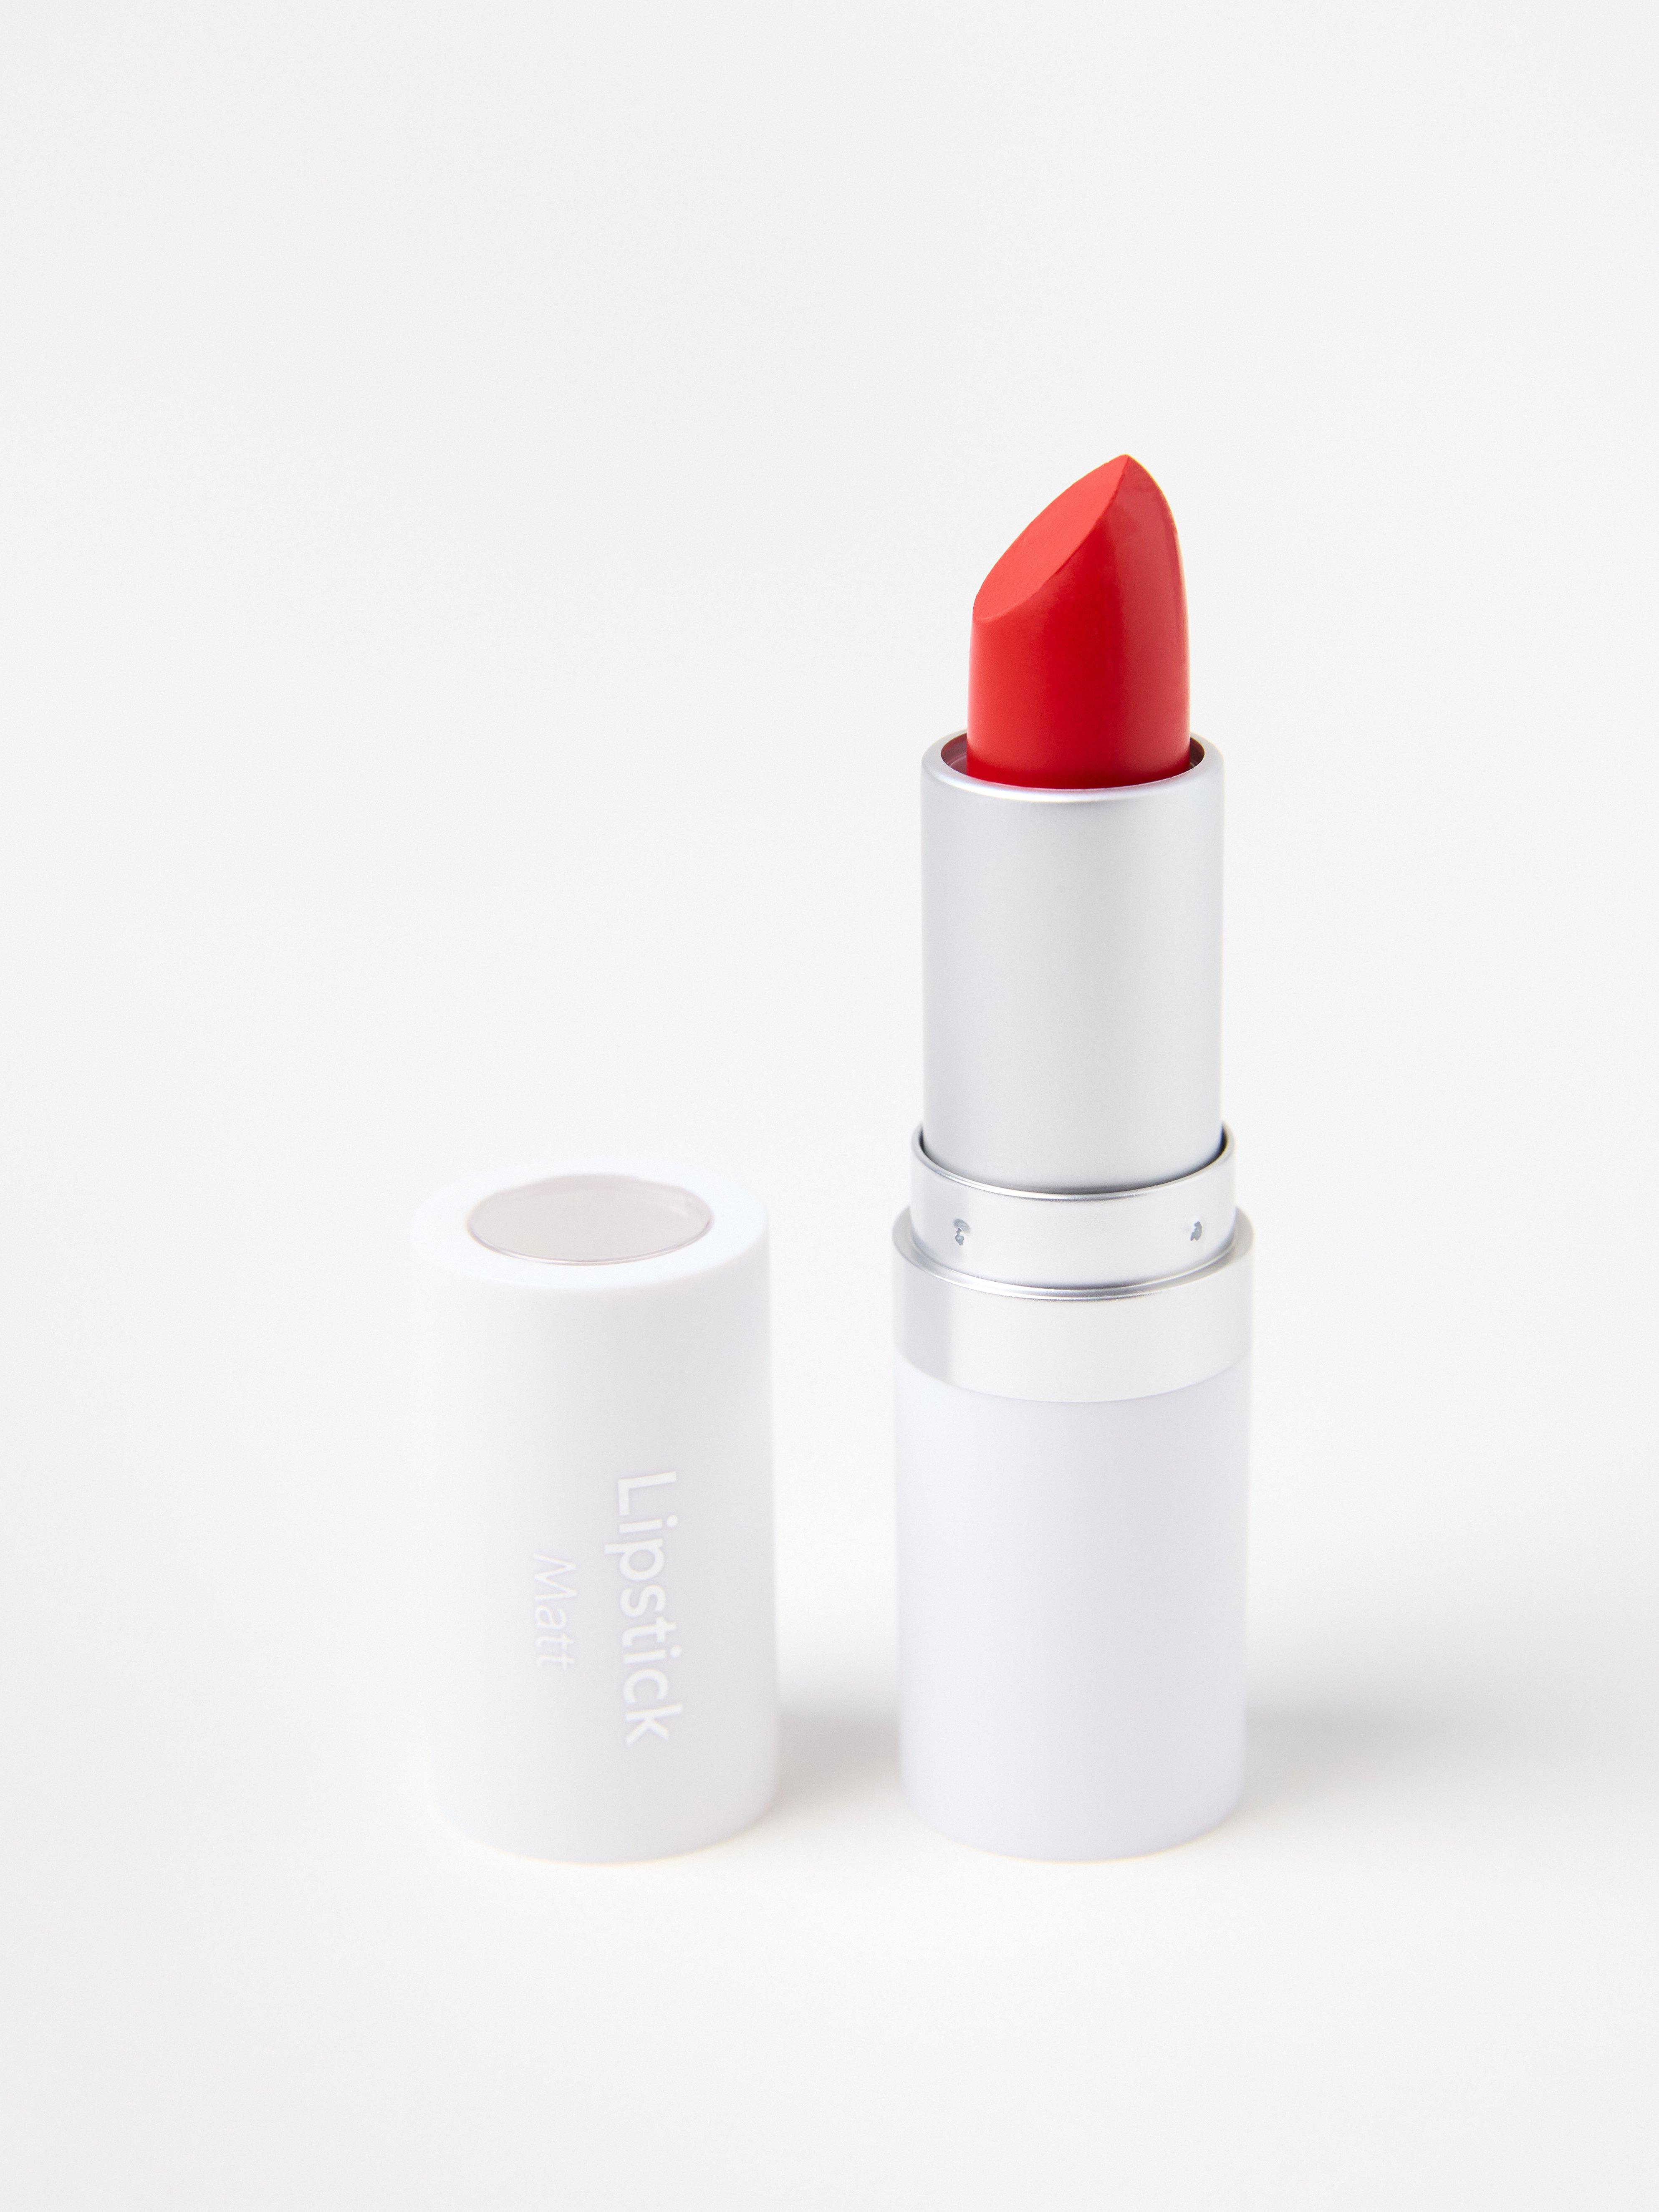 Lipstick  Lindex UK